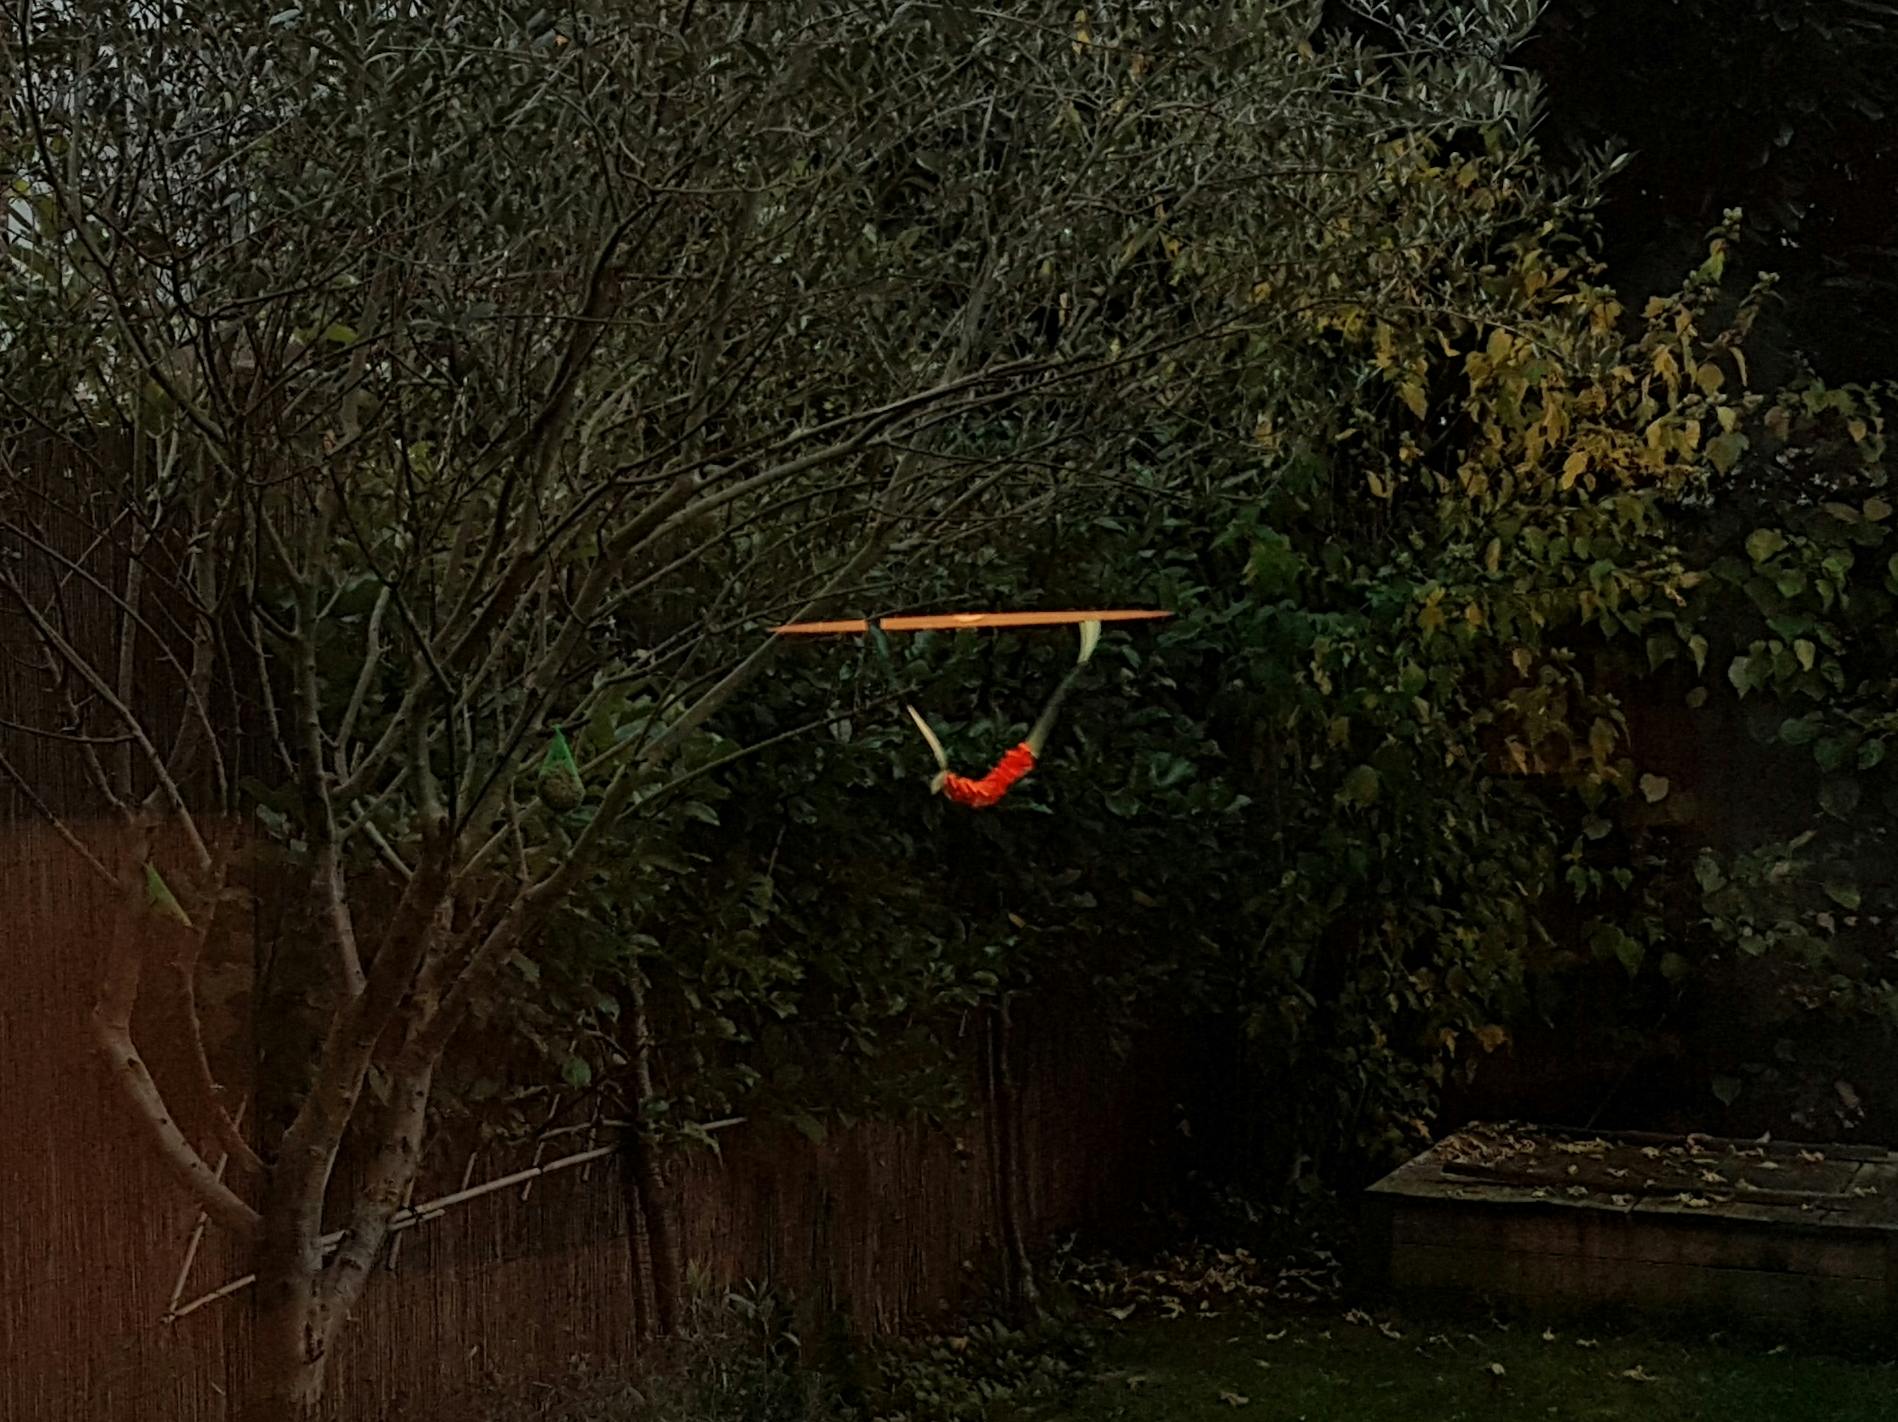 Unidentified flying object in the garden